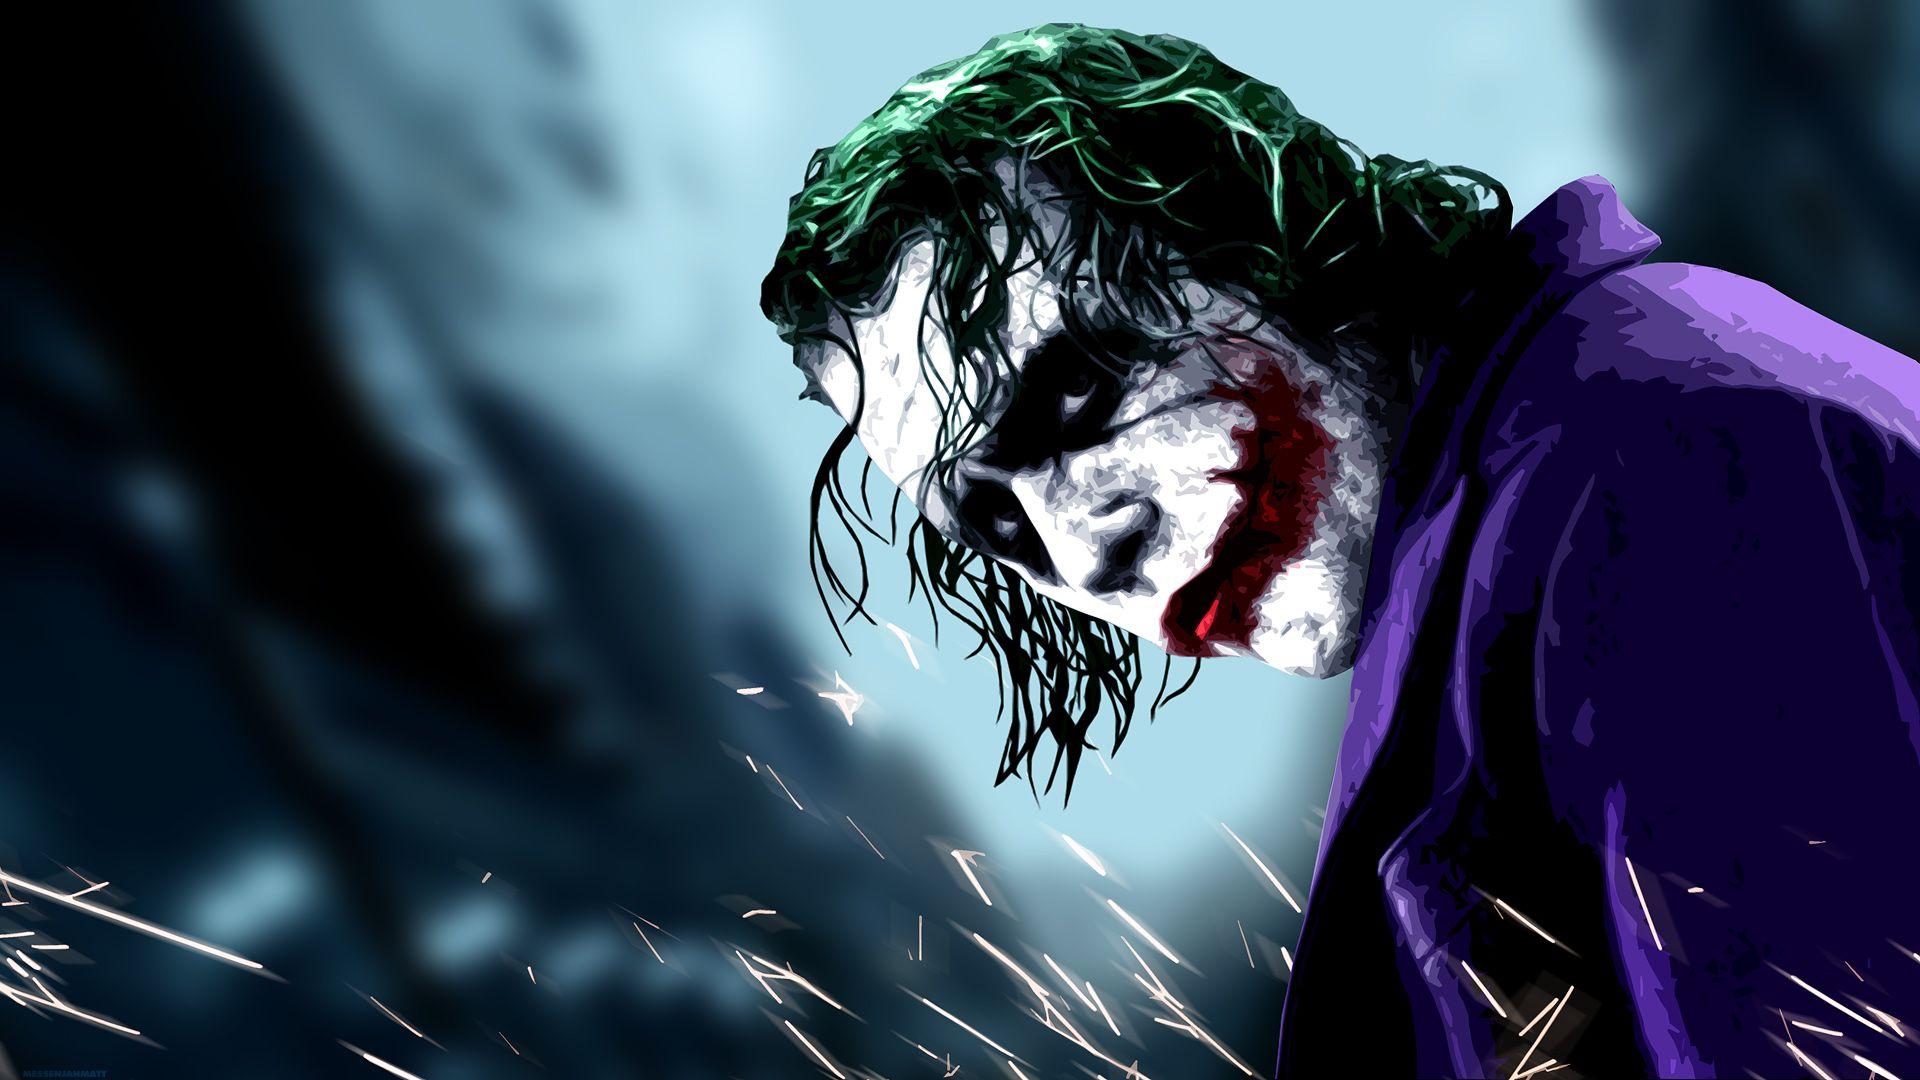 Super Cool Joker Wallpapers - Top Free ...